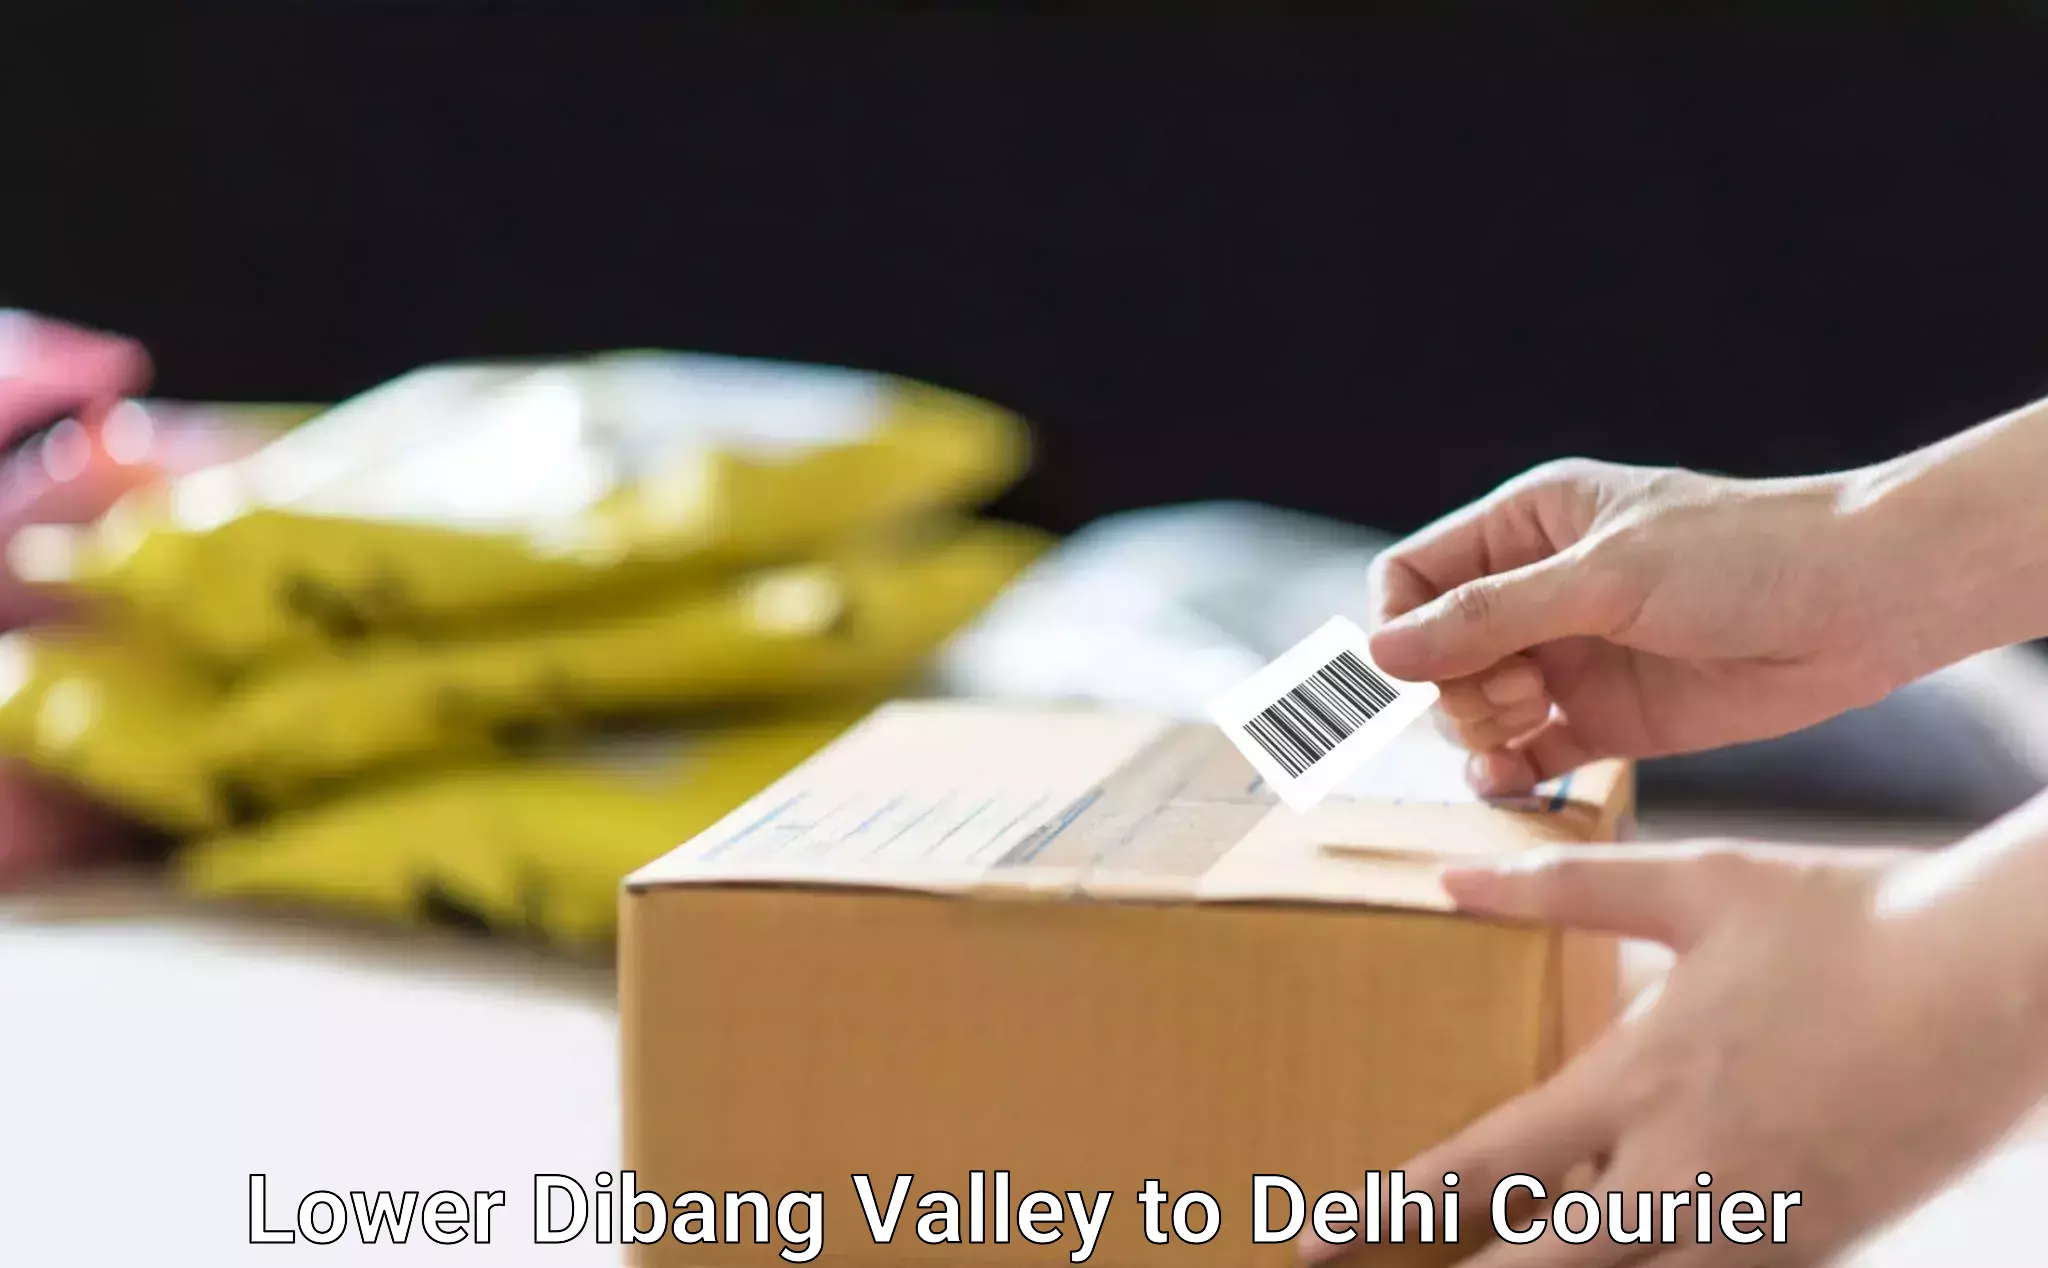 Digital courier platforms Lower Dibang Valley to East Delhi